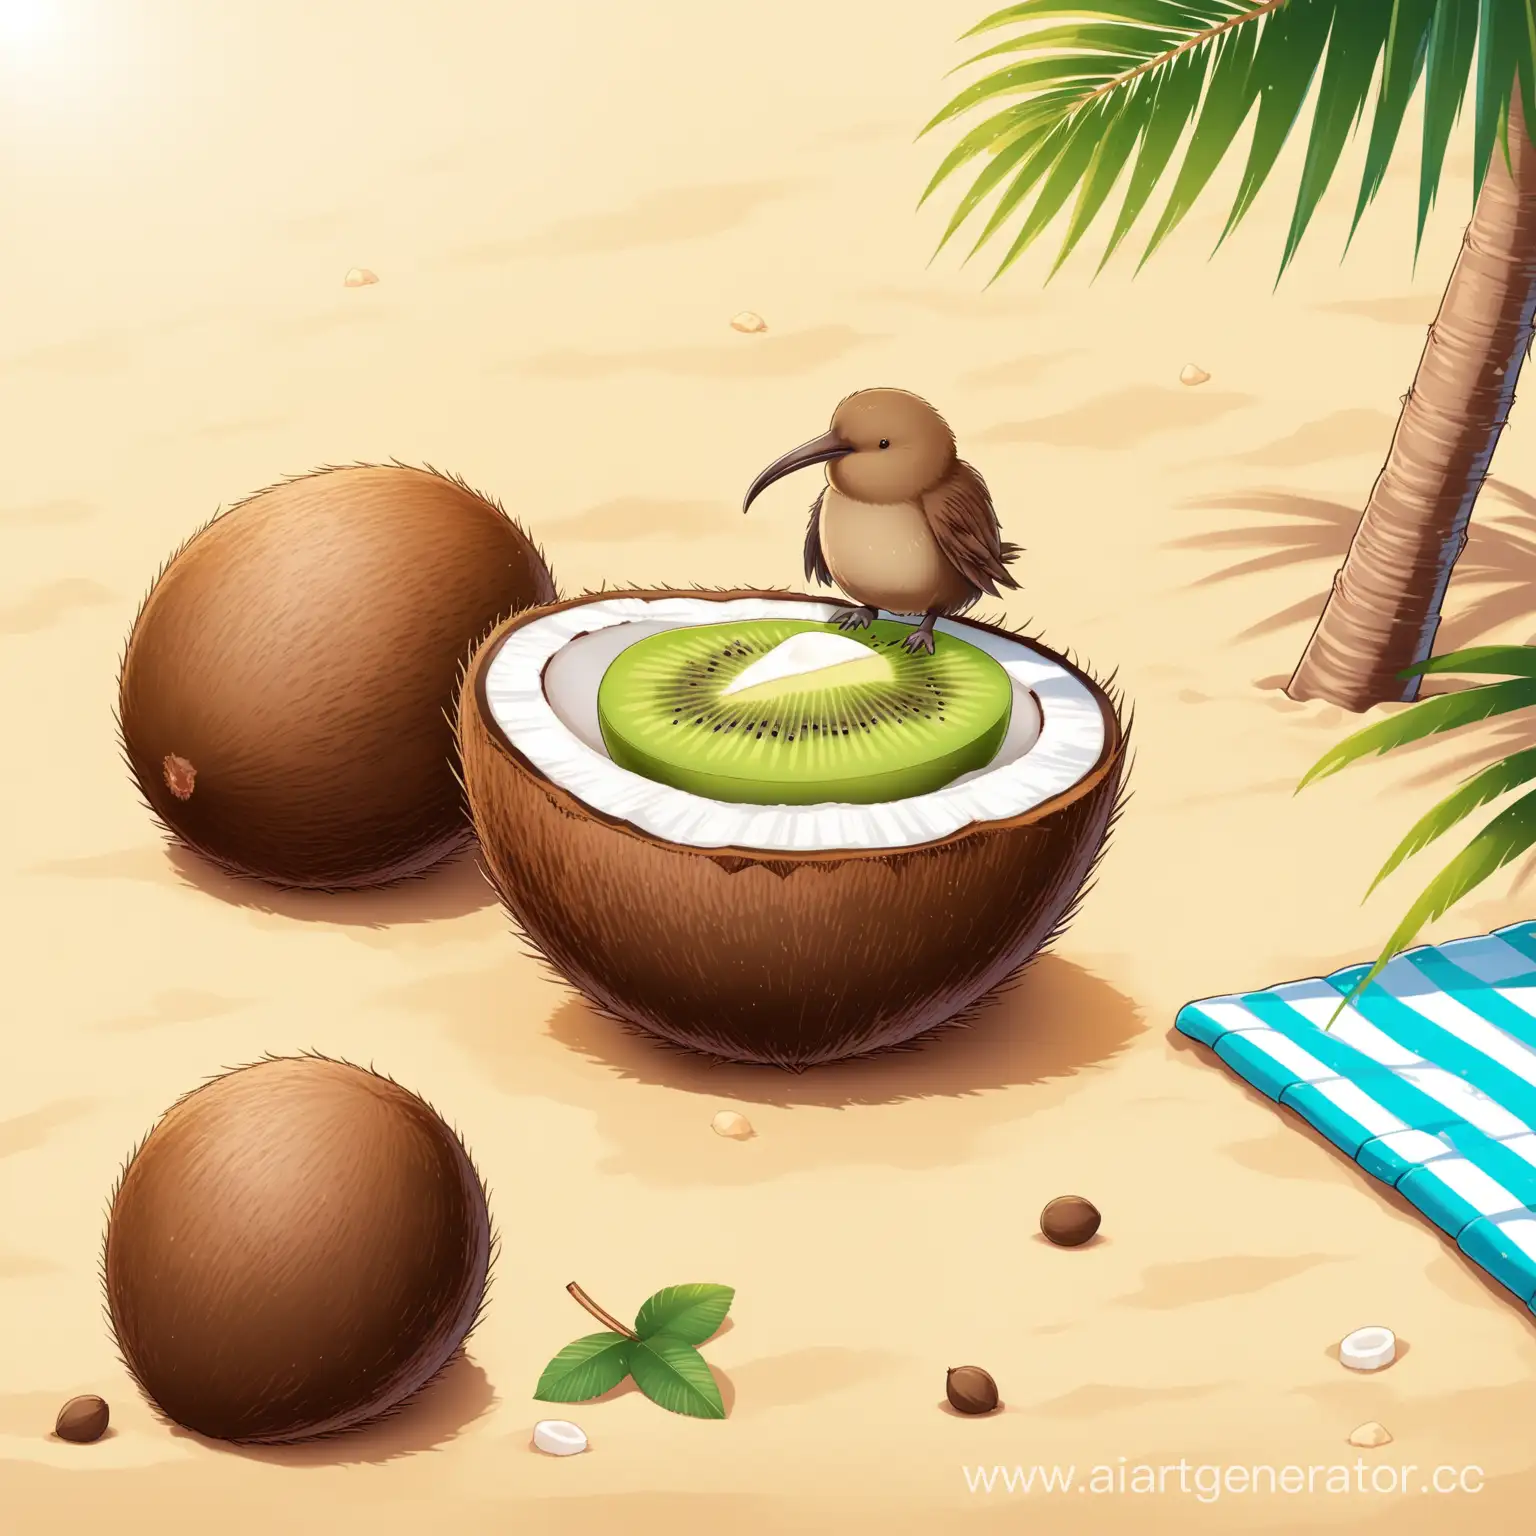 Kiwi-Bird-Sunbathing-on-Beach-with-Coconut